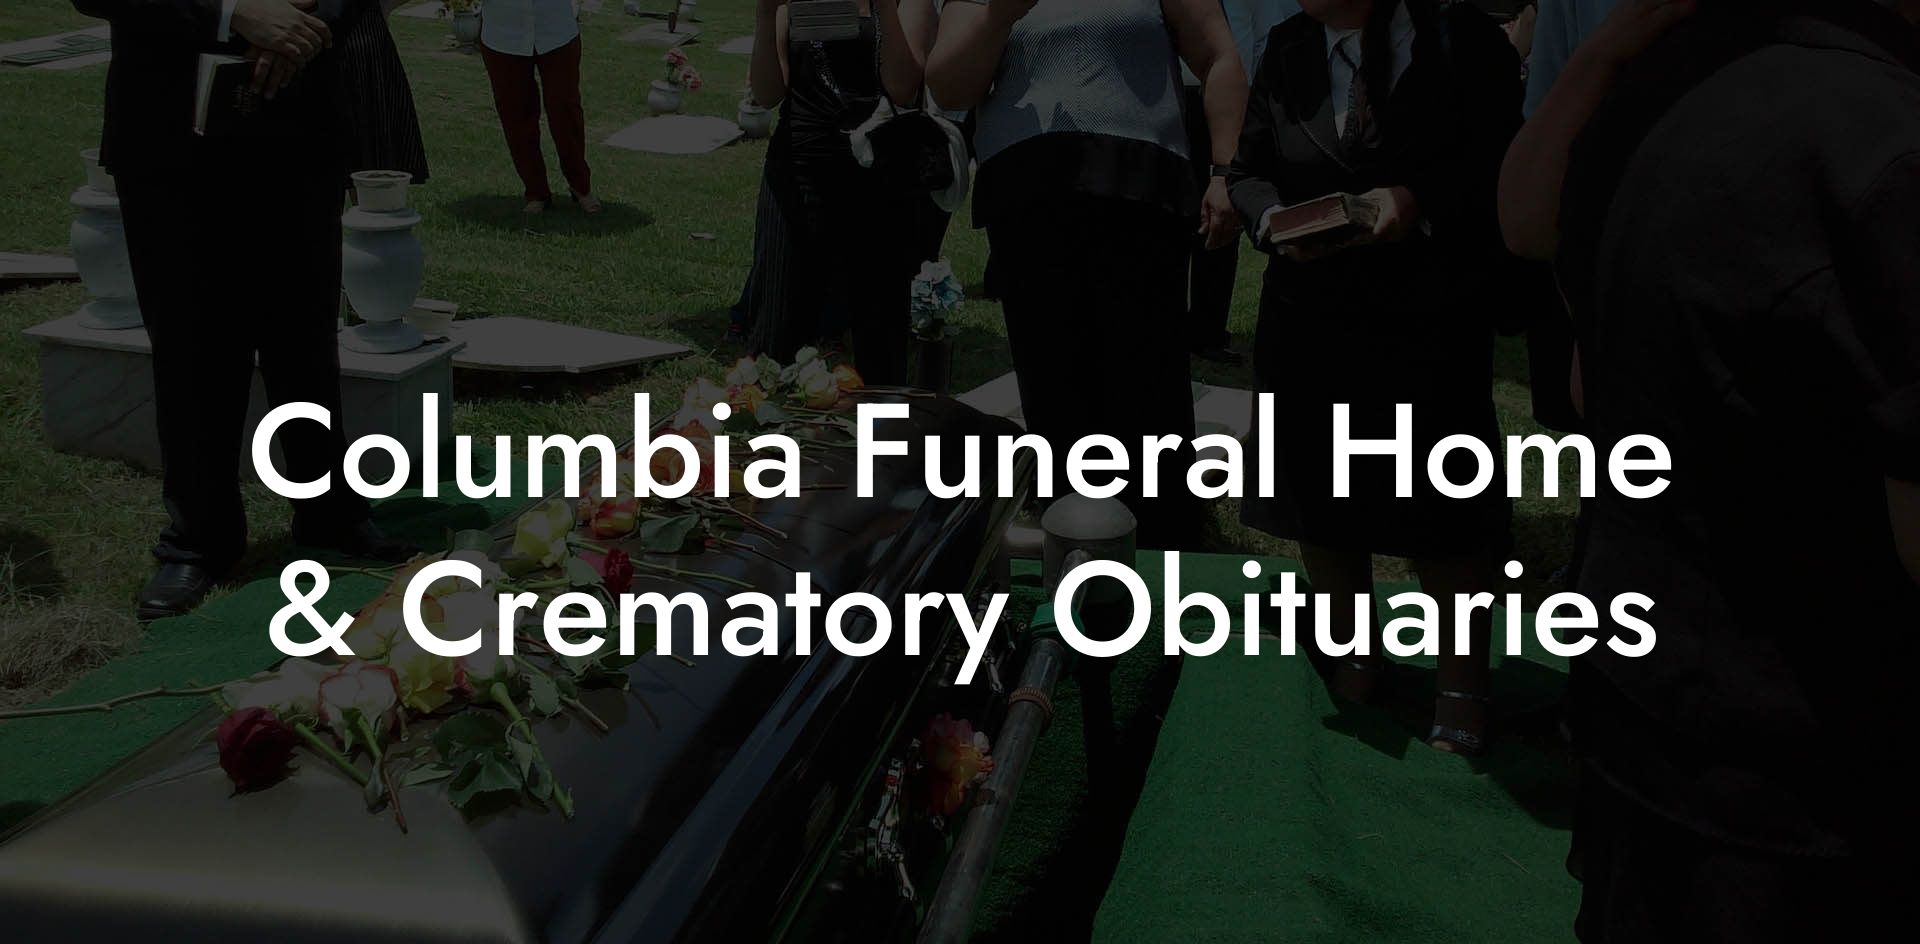 Columbia Funeral Home & Crematory Obituaries